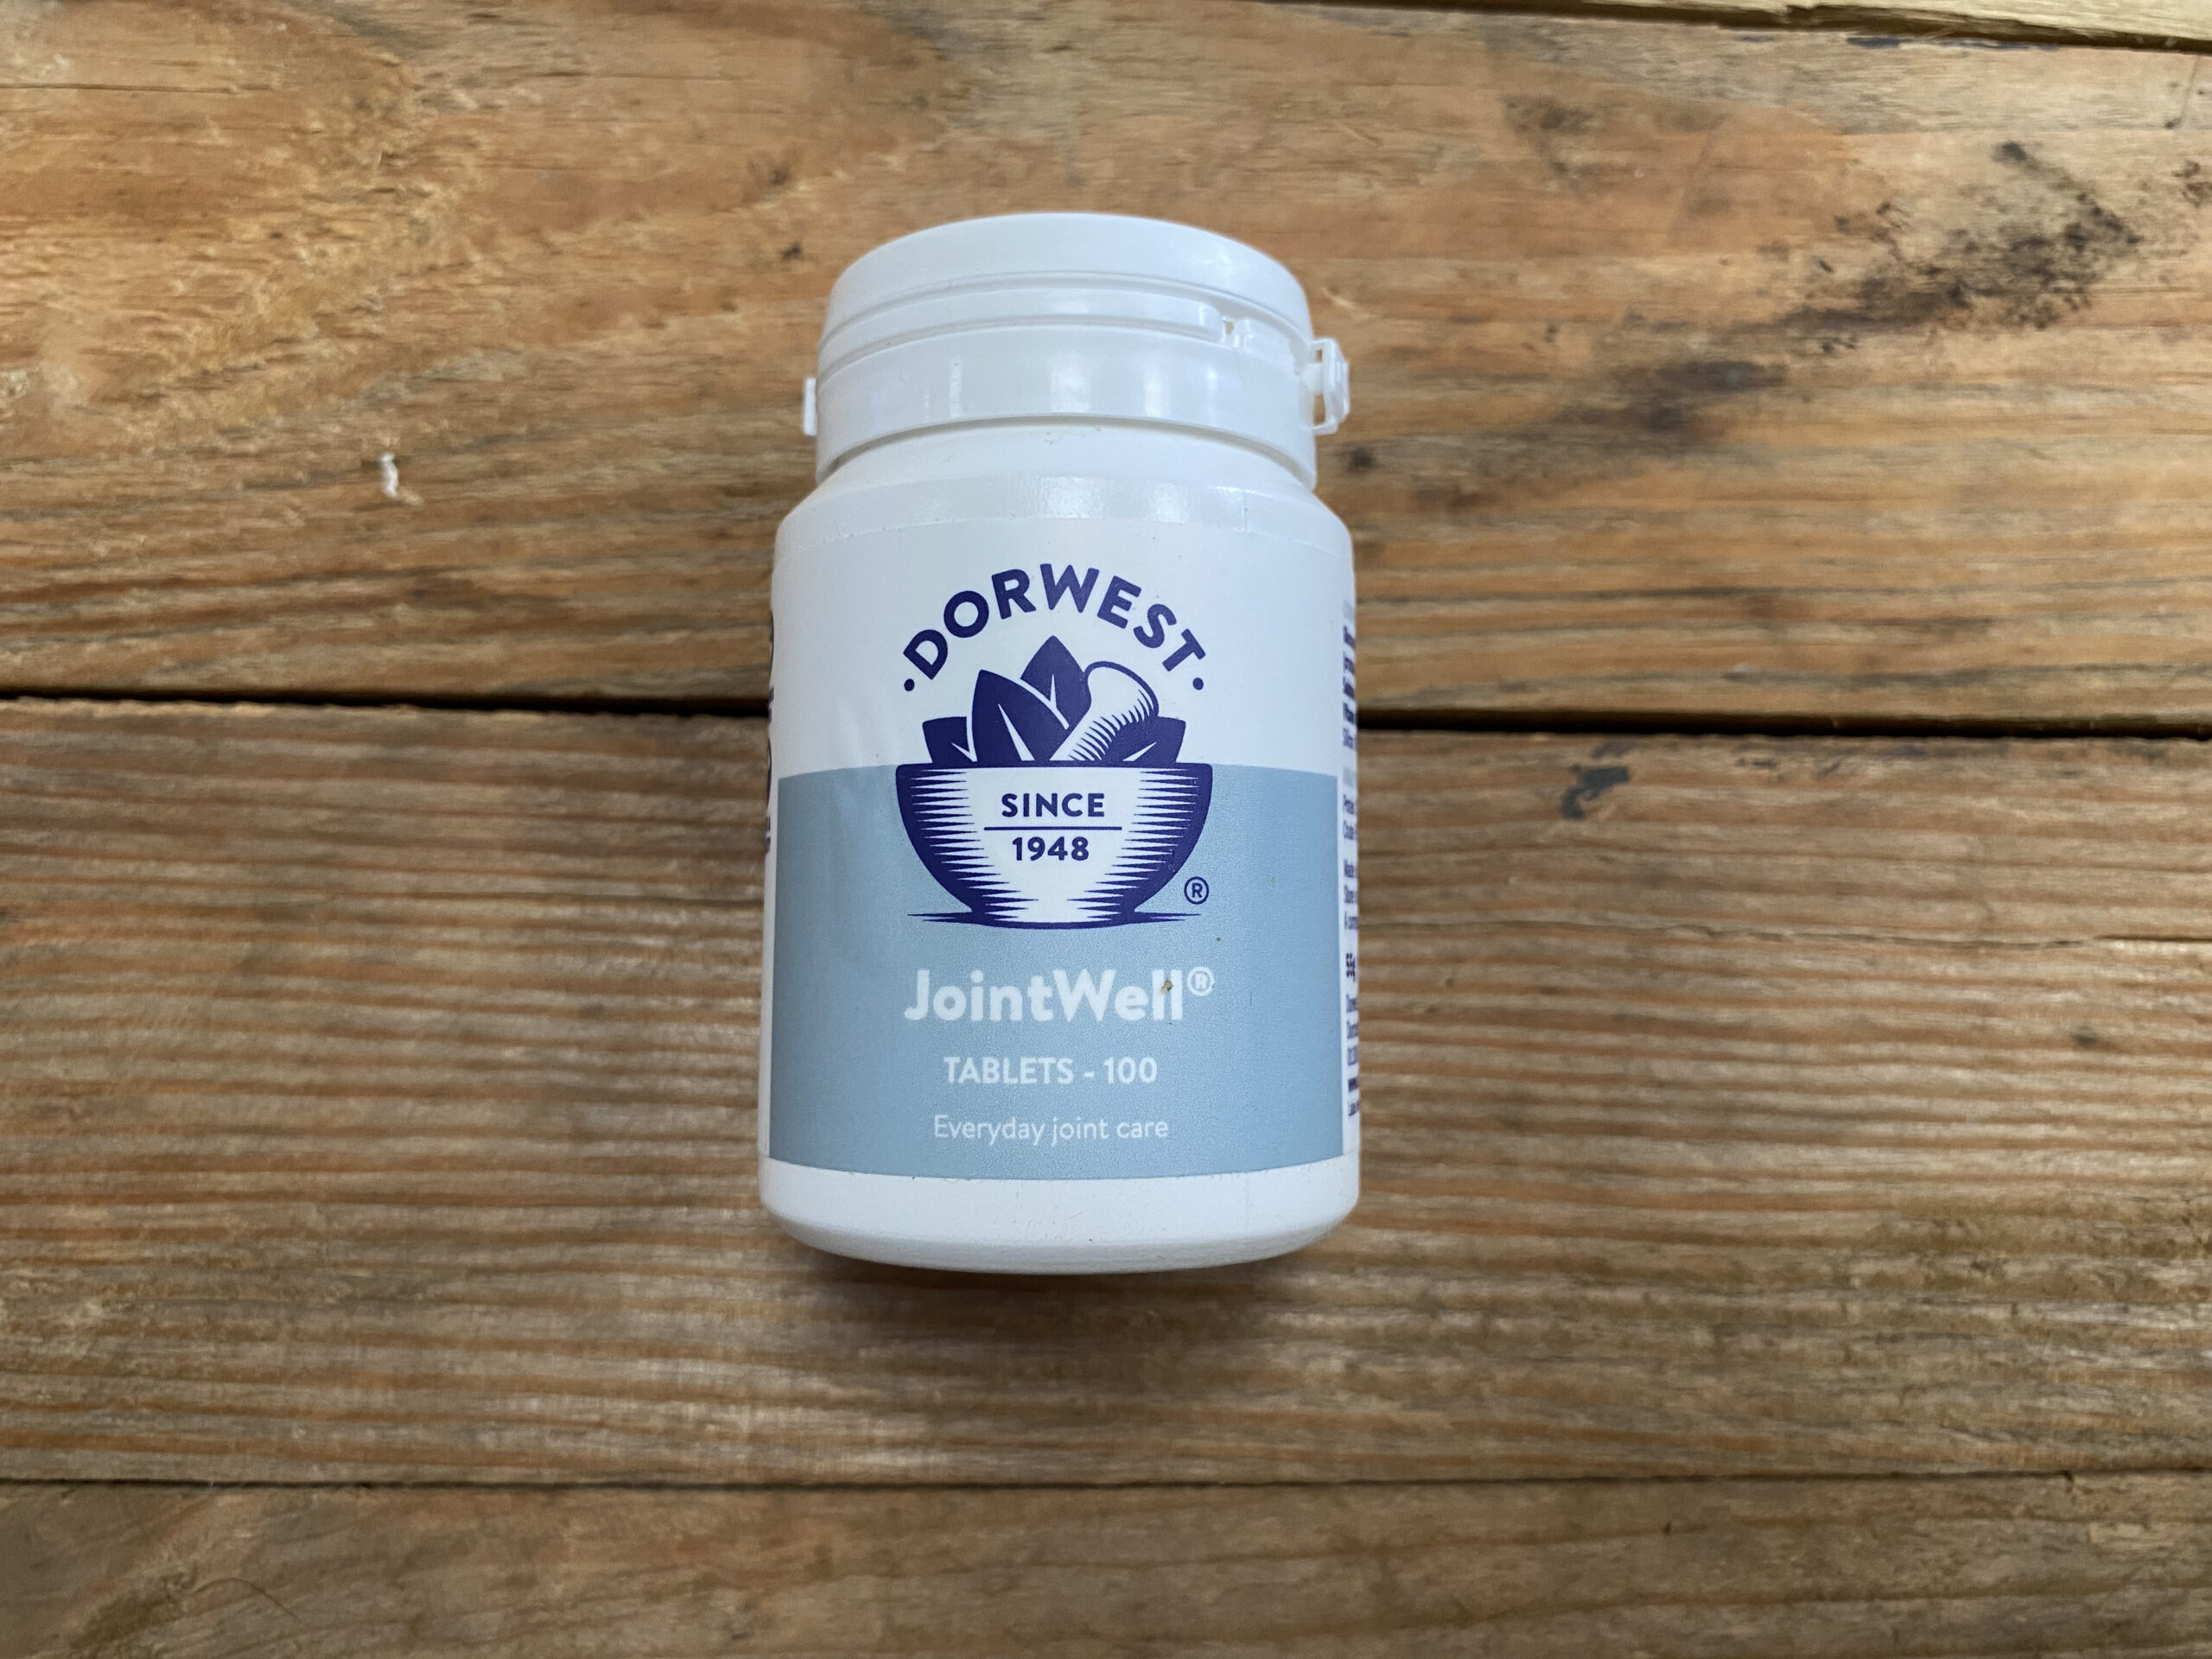 Dorwest JointWell Tablets – 100